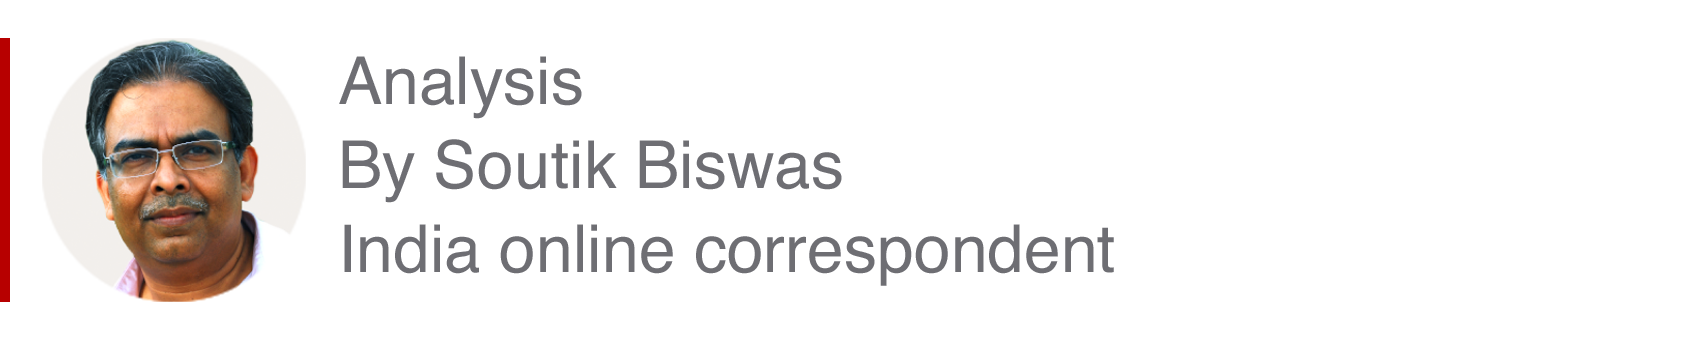 Analysis box by Soutik Biswas, India online correspondent